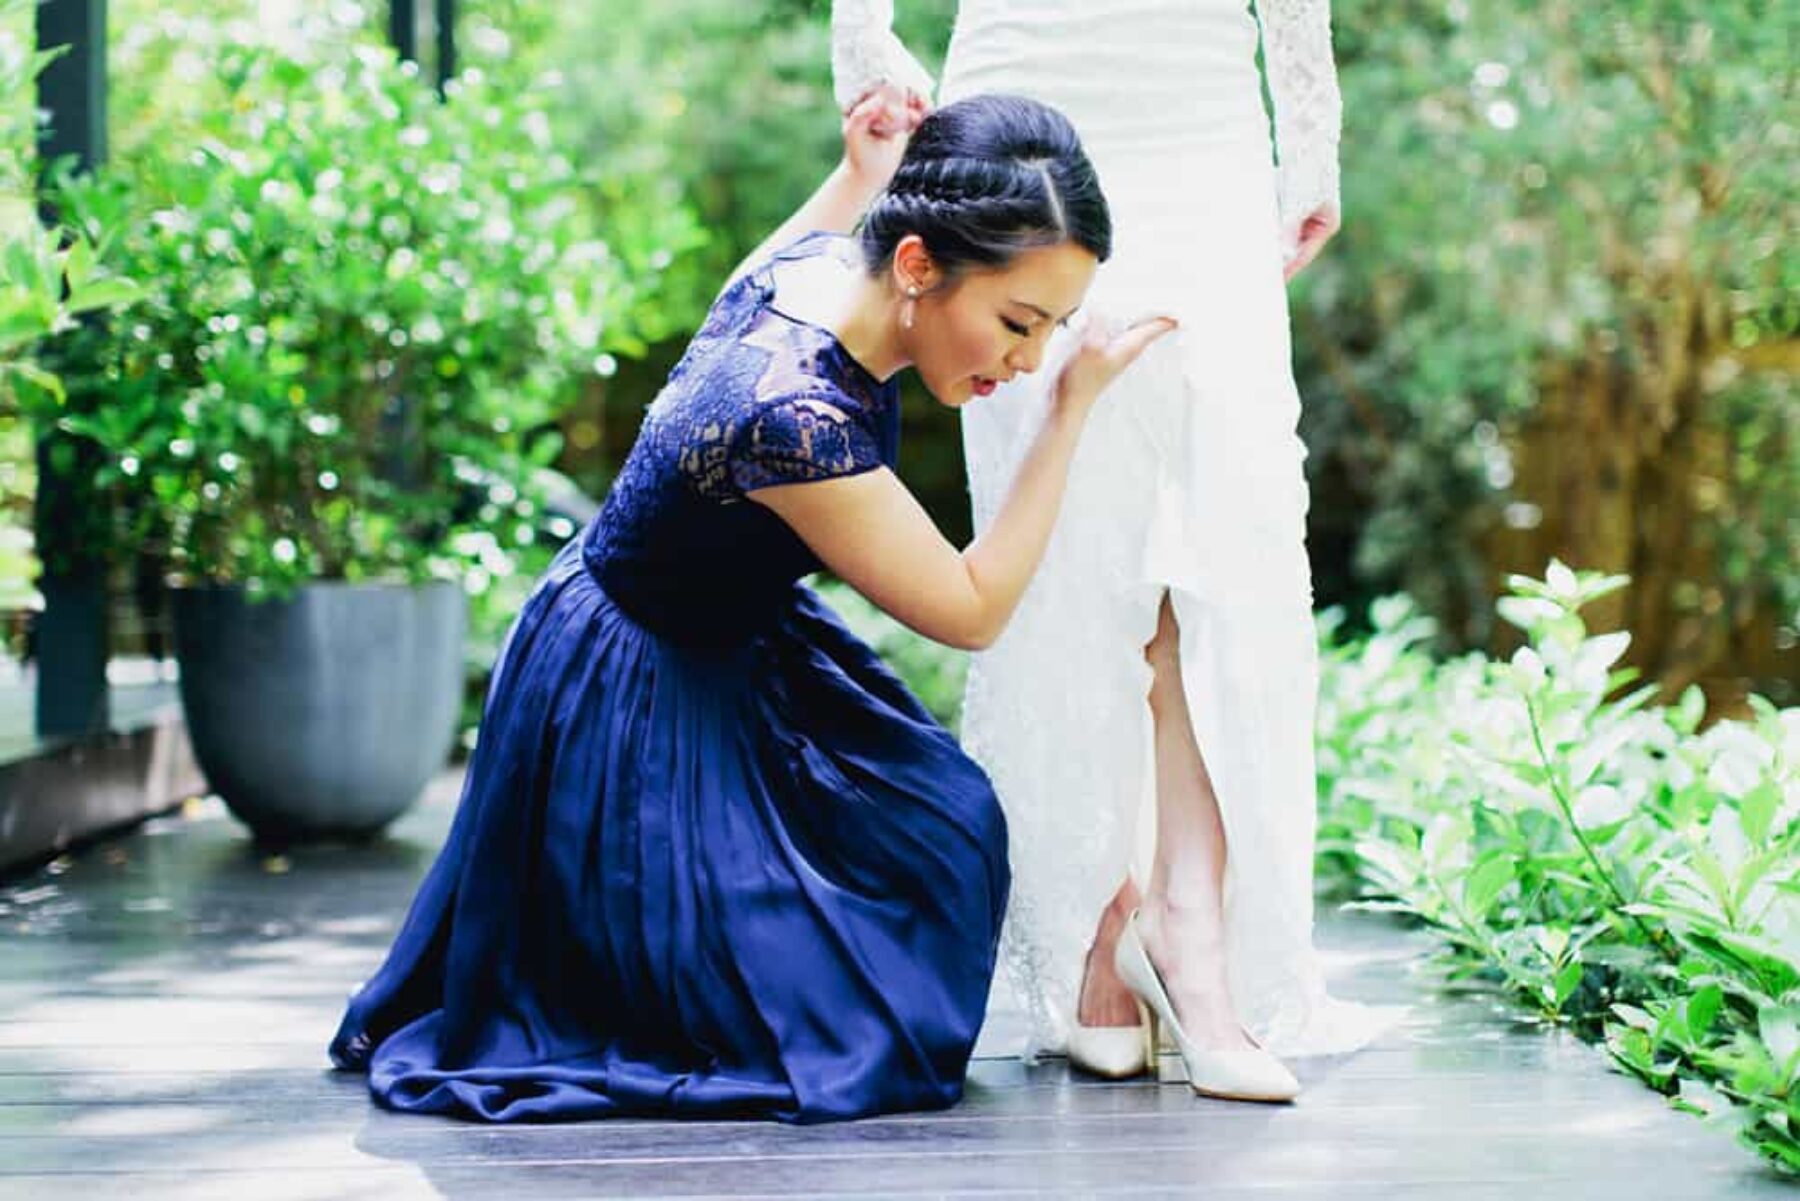 blue lace bridesmaid dress